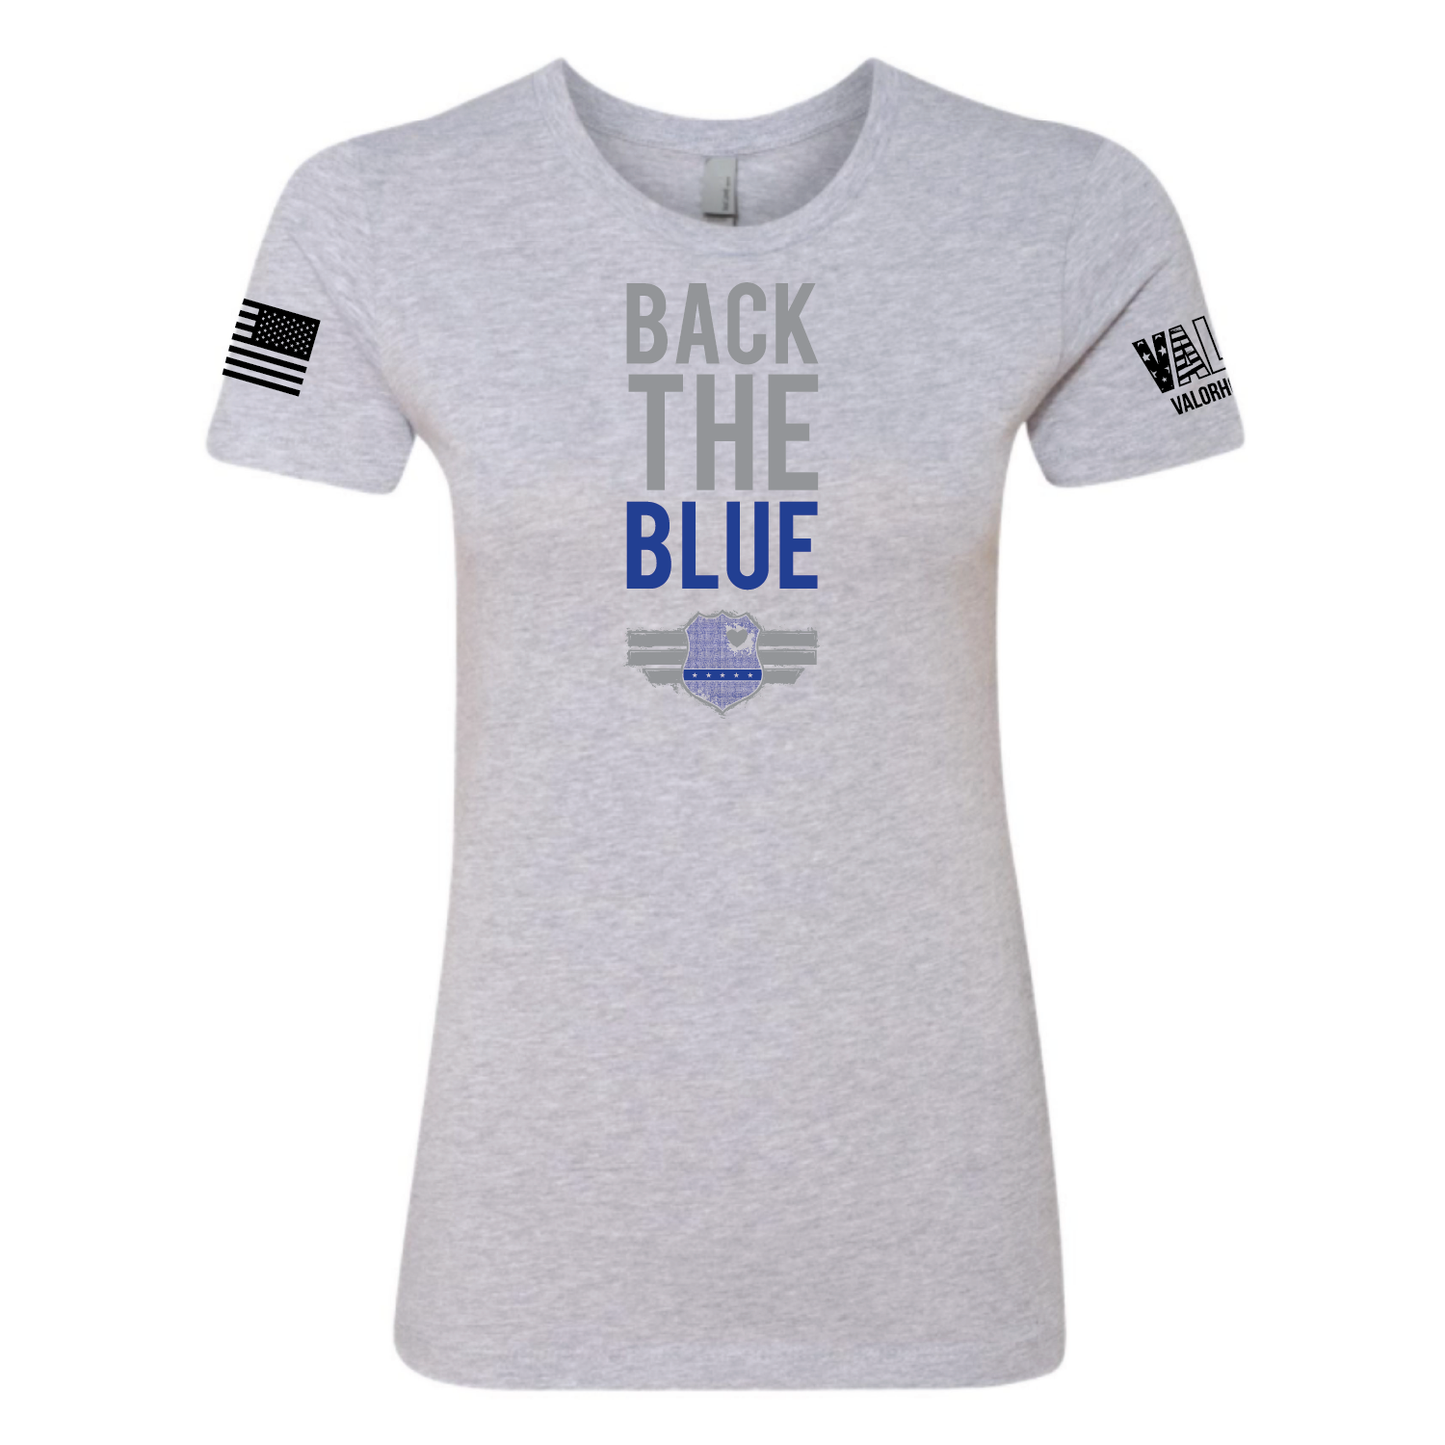 Ladies "Back the Blue" Shirt